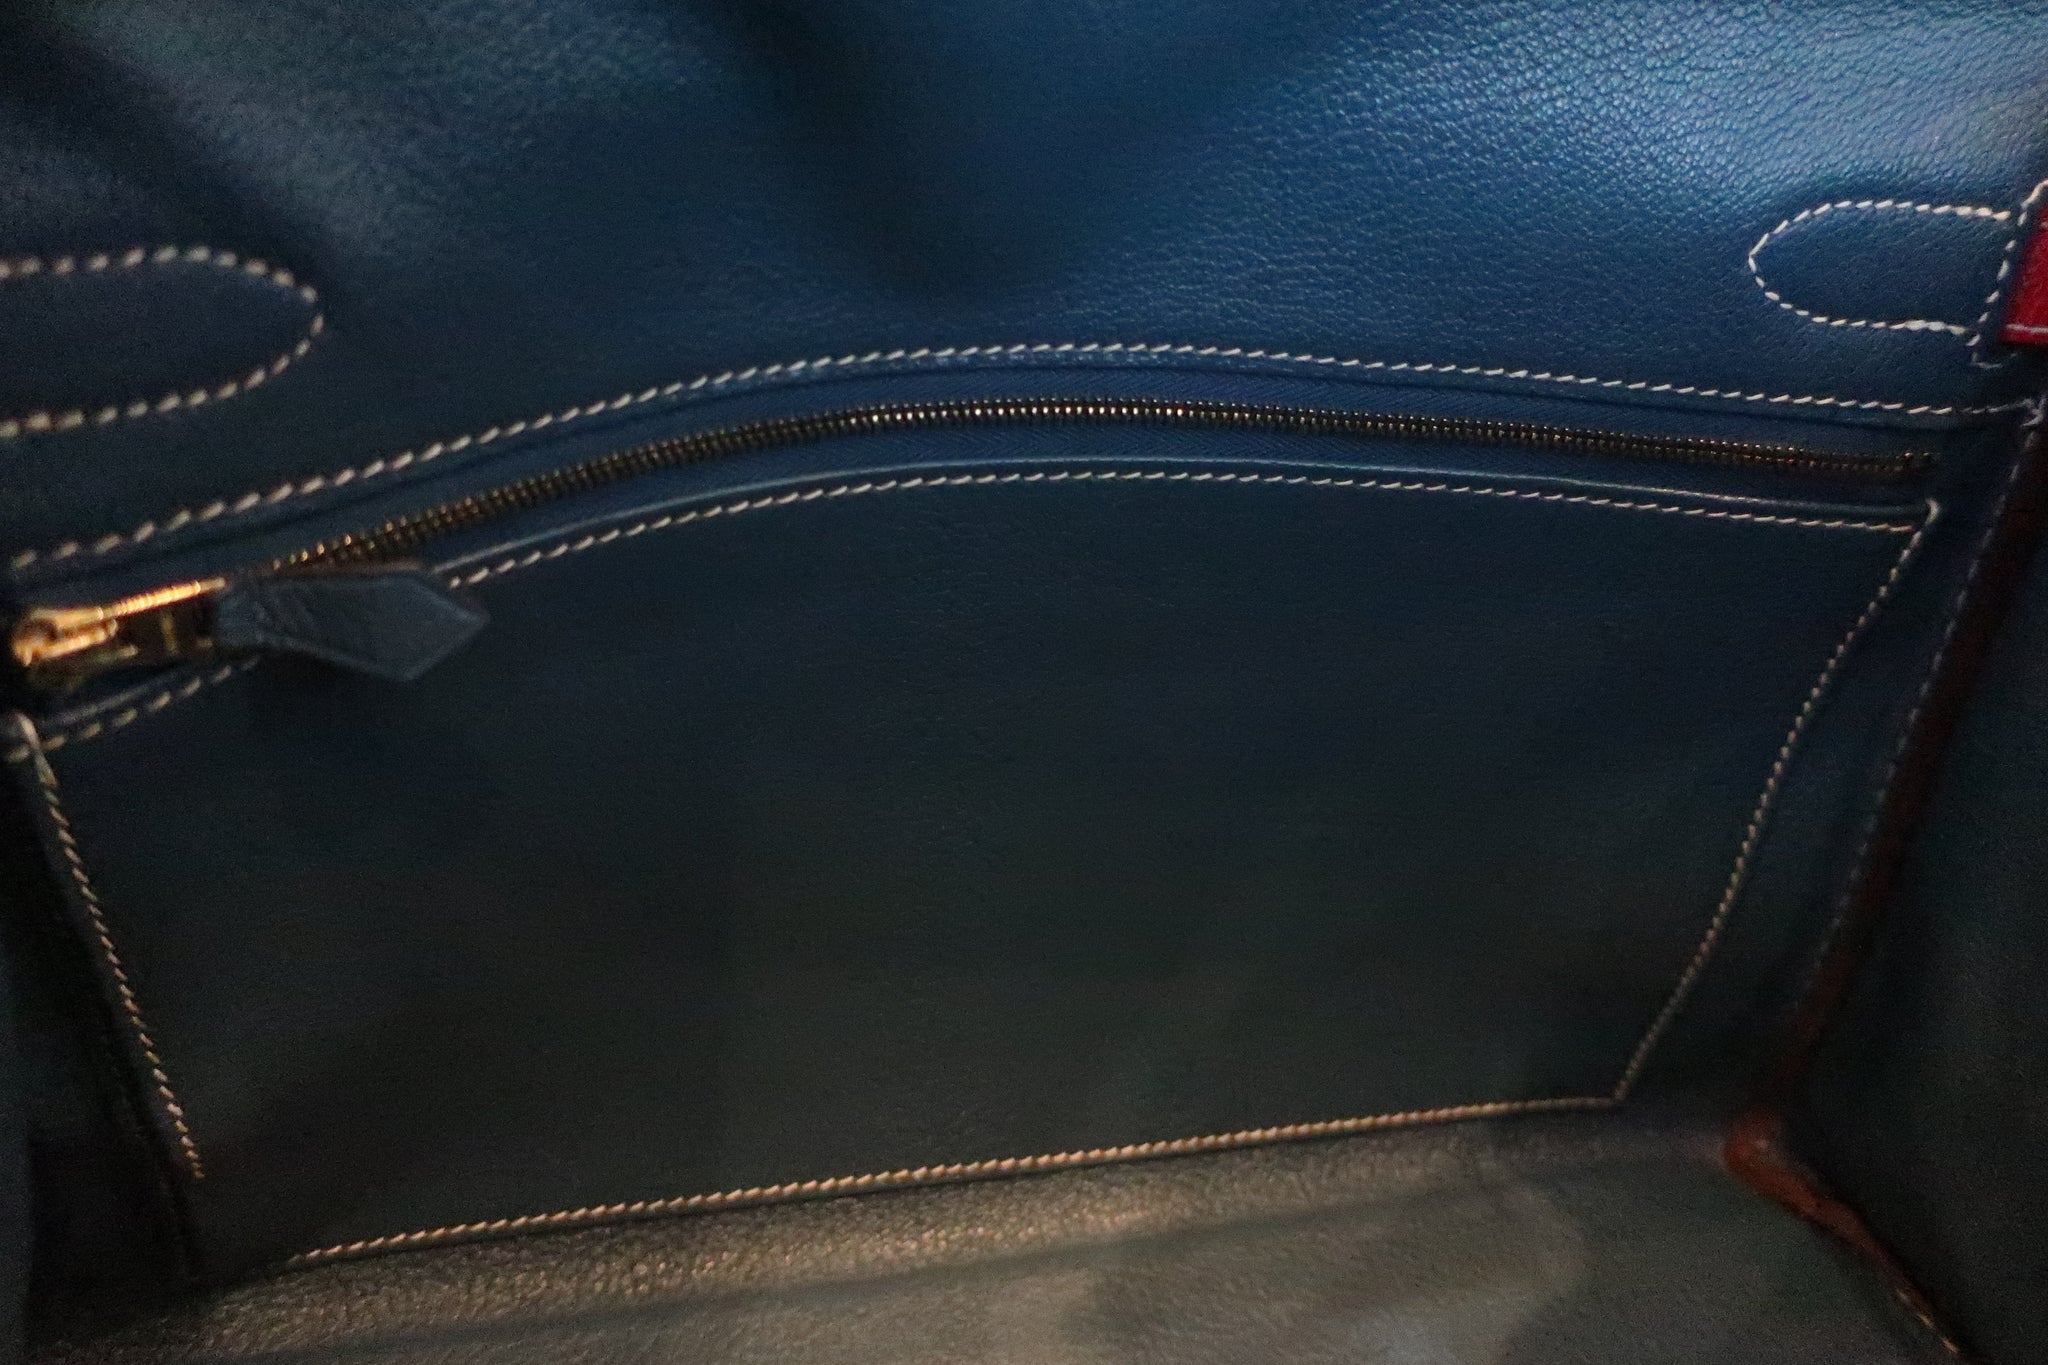 Hermes Birkin 40 Leather Bag